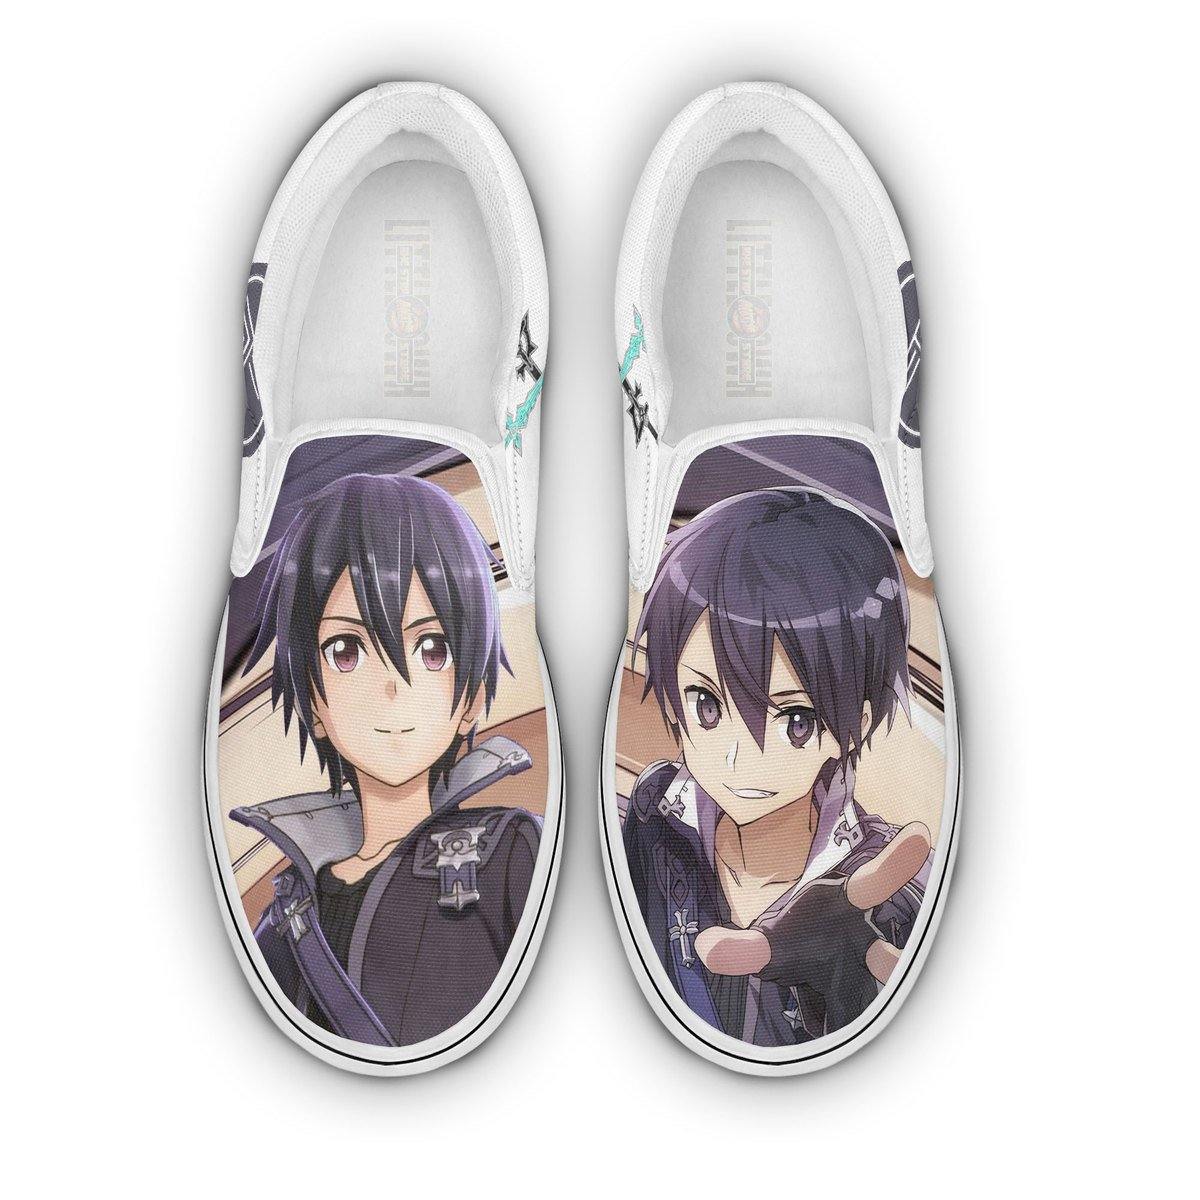 Sword Art Online Kirito Shoes Custom Anime Classic Slip-On Sneakers